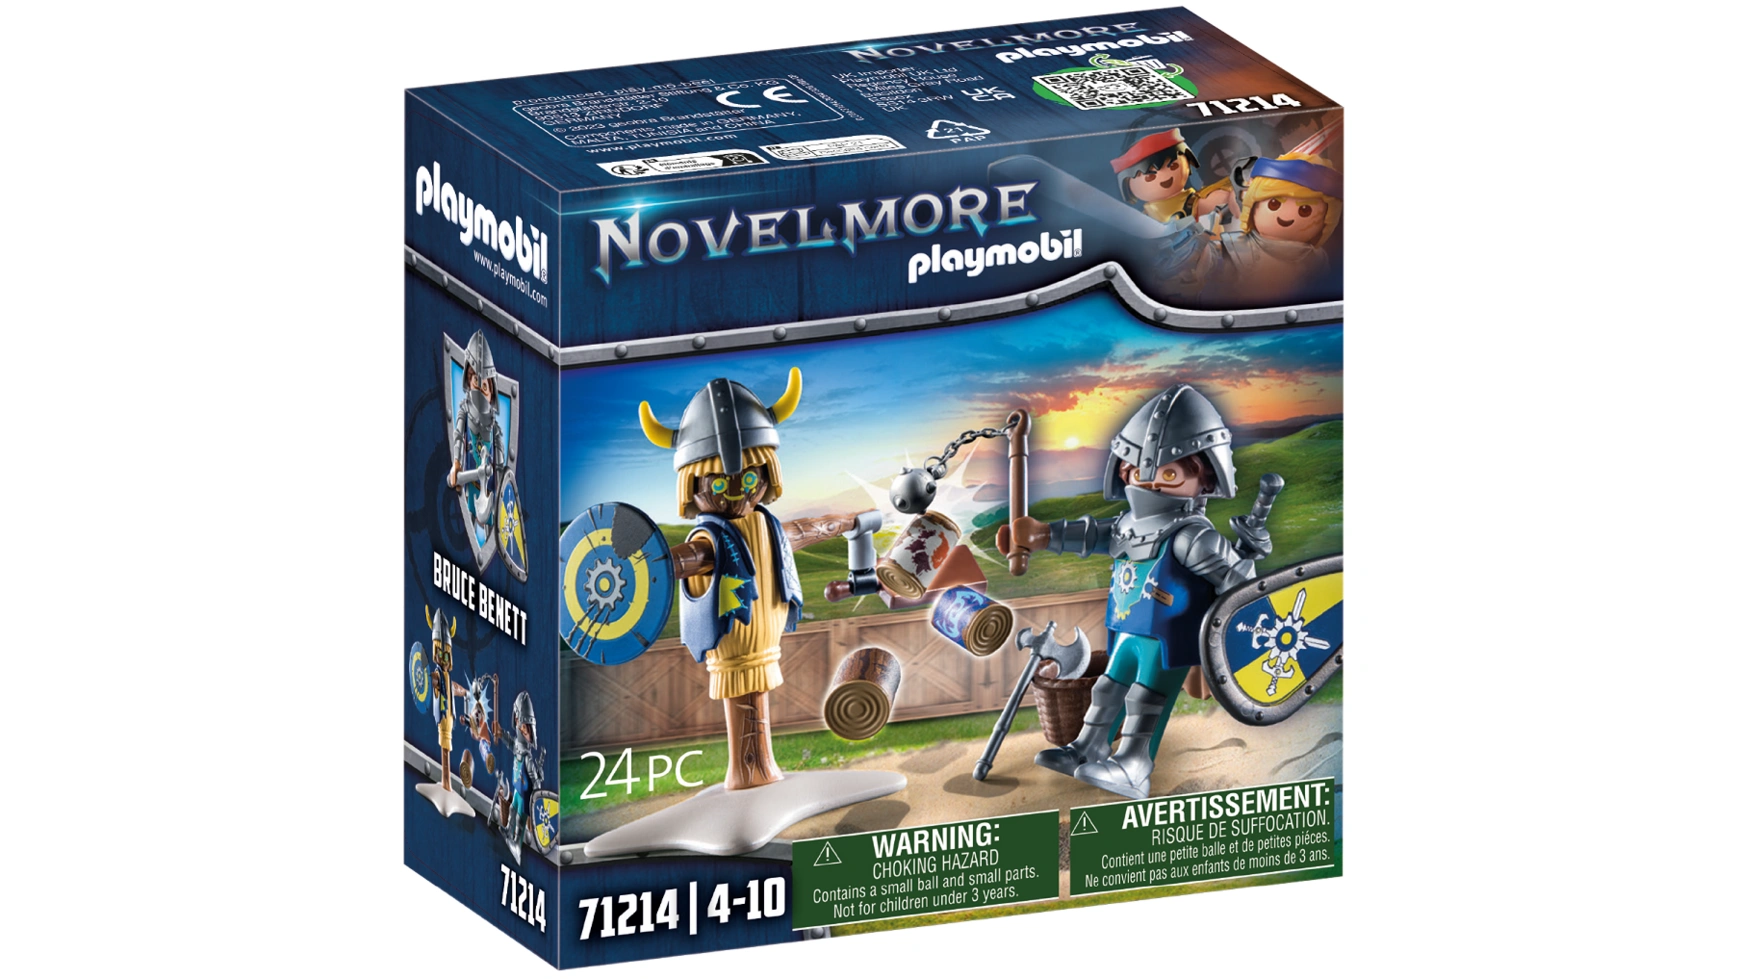 novelmore мои фигурки рыцари новелмора playmobil Novelmore боевая подготовка Playmobil